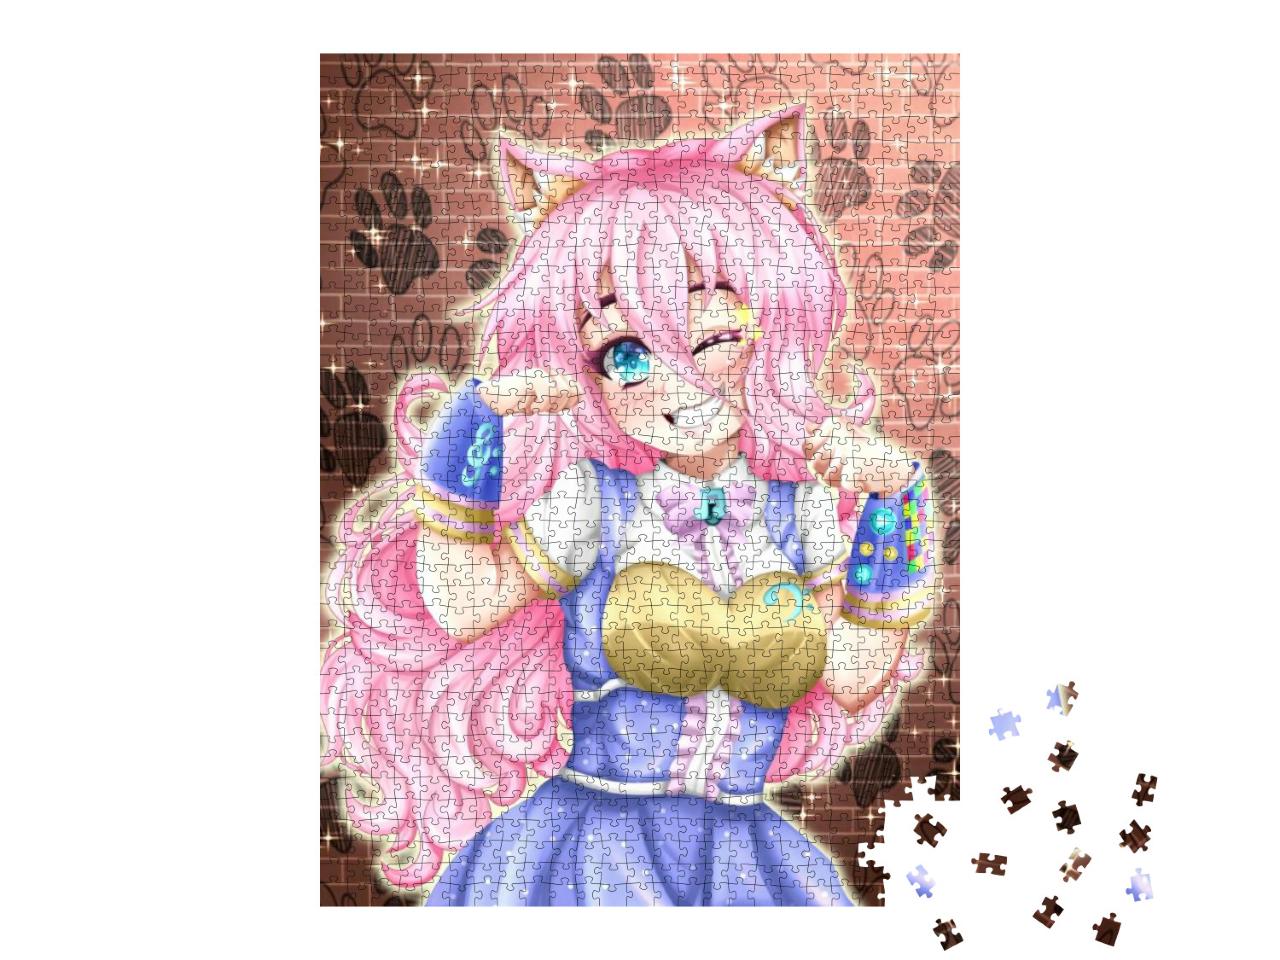 Happy Kawaii Anime Neko Girl of Pink Hair, Anime Illustra... Jigsaw Puzzle with 1000 pieces